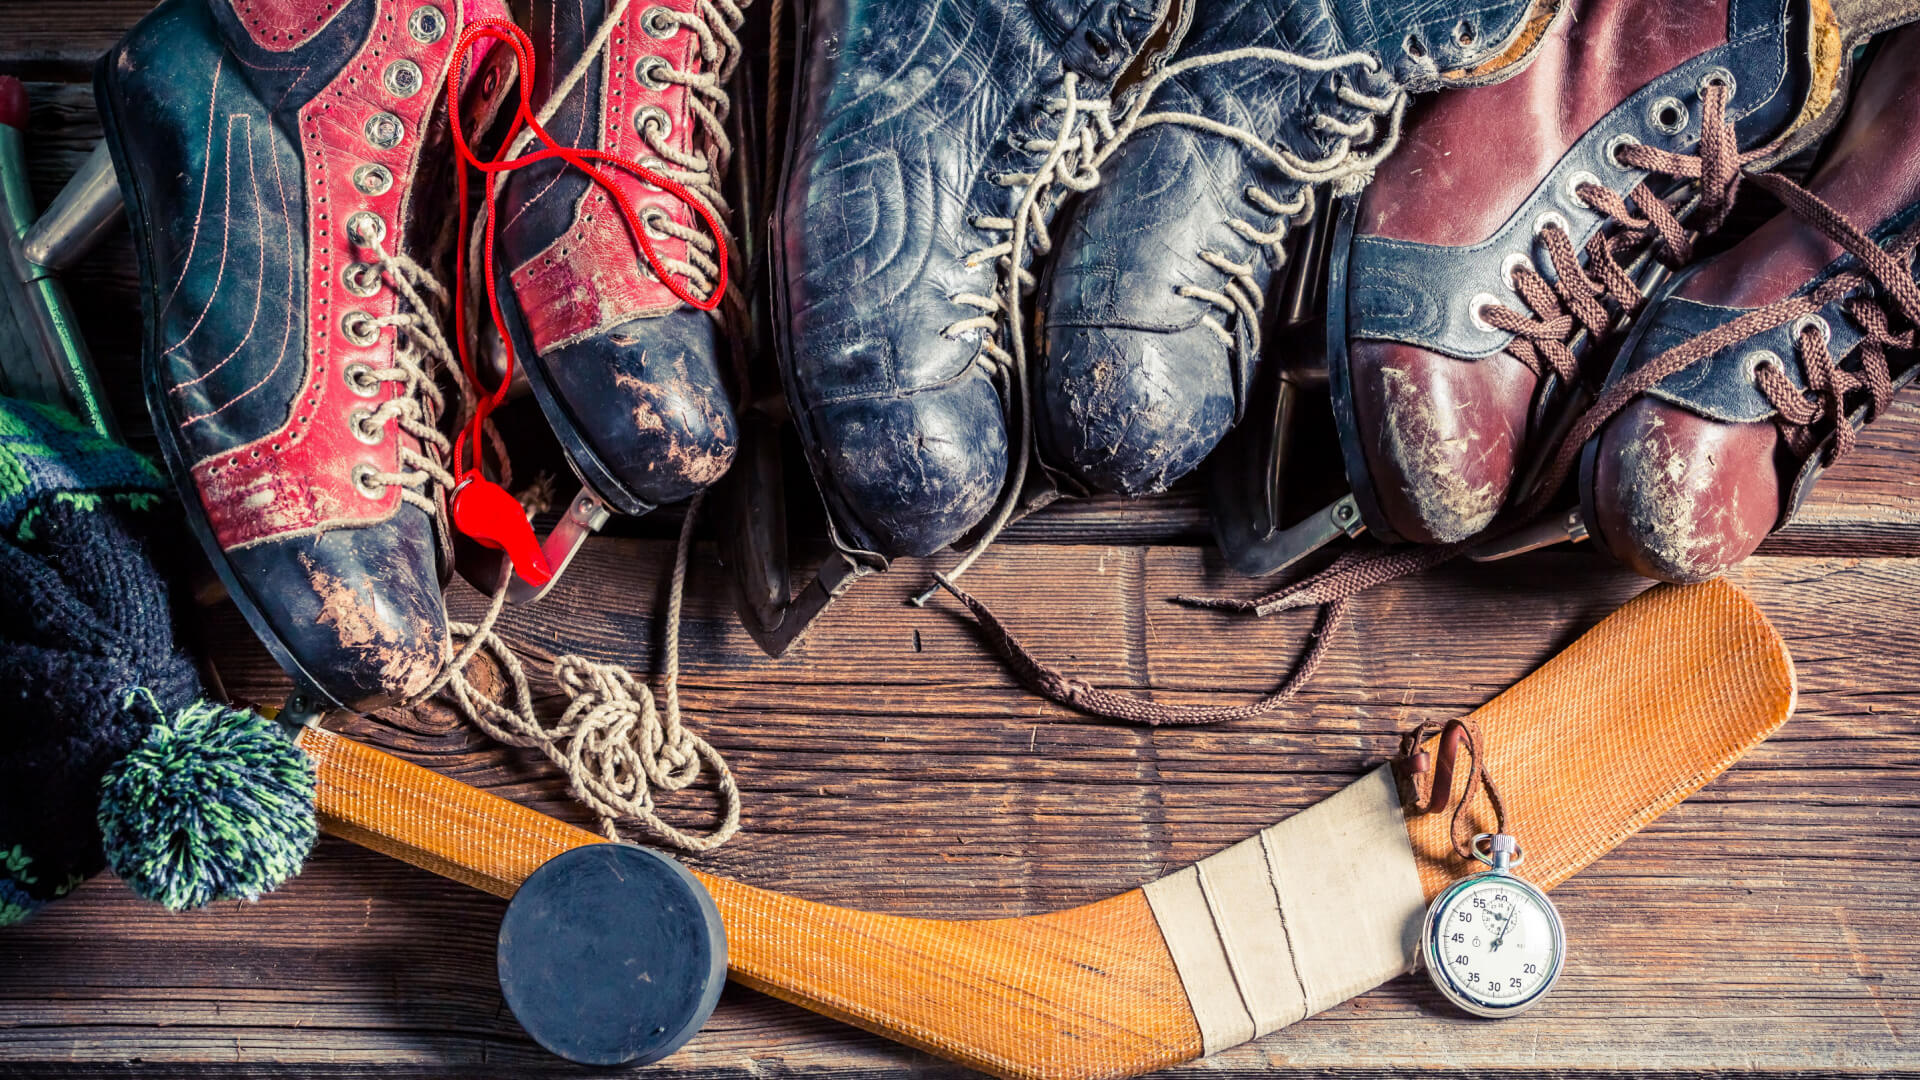 original ahl teams - old skates and other hockey gear